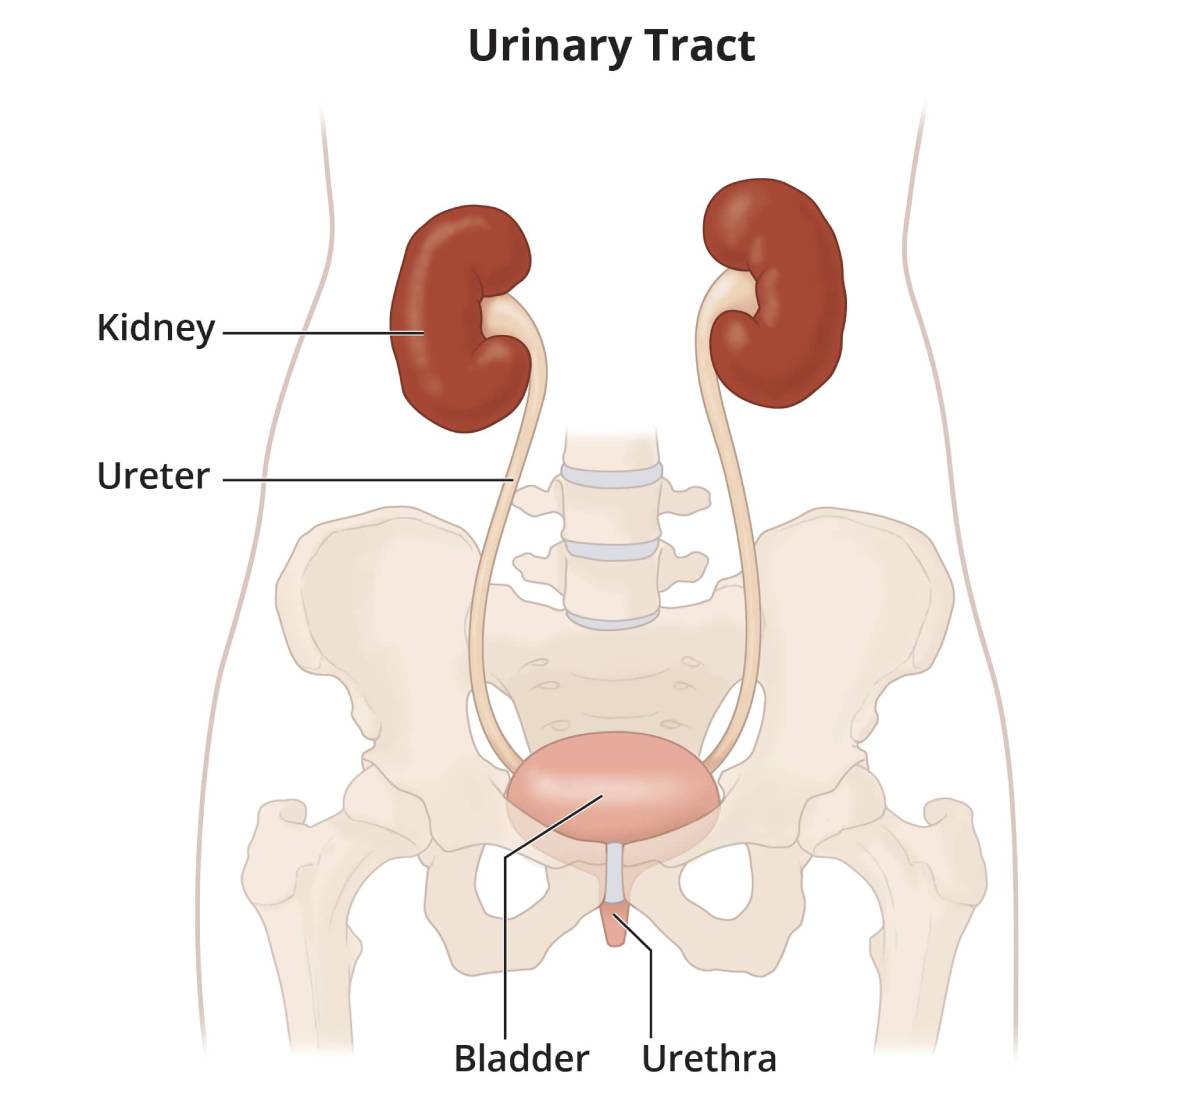 Illustration of the urinary tract, including kidneys, ureter, bladder, and urethra.